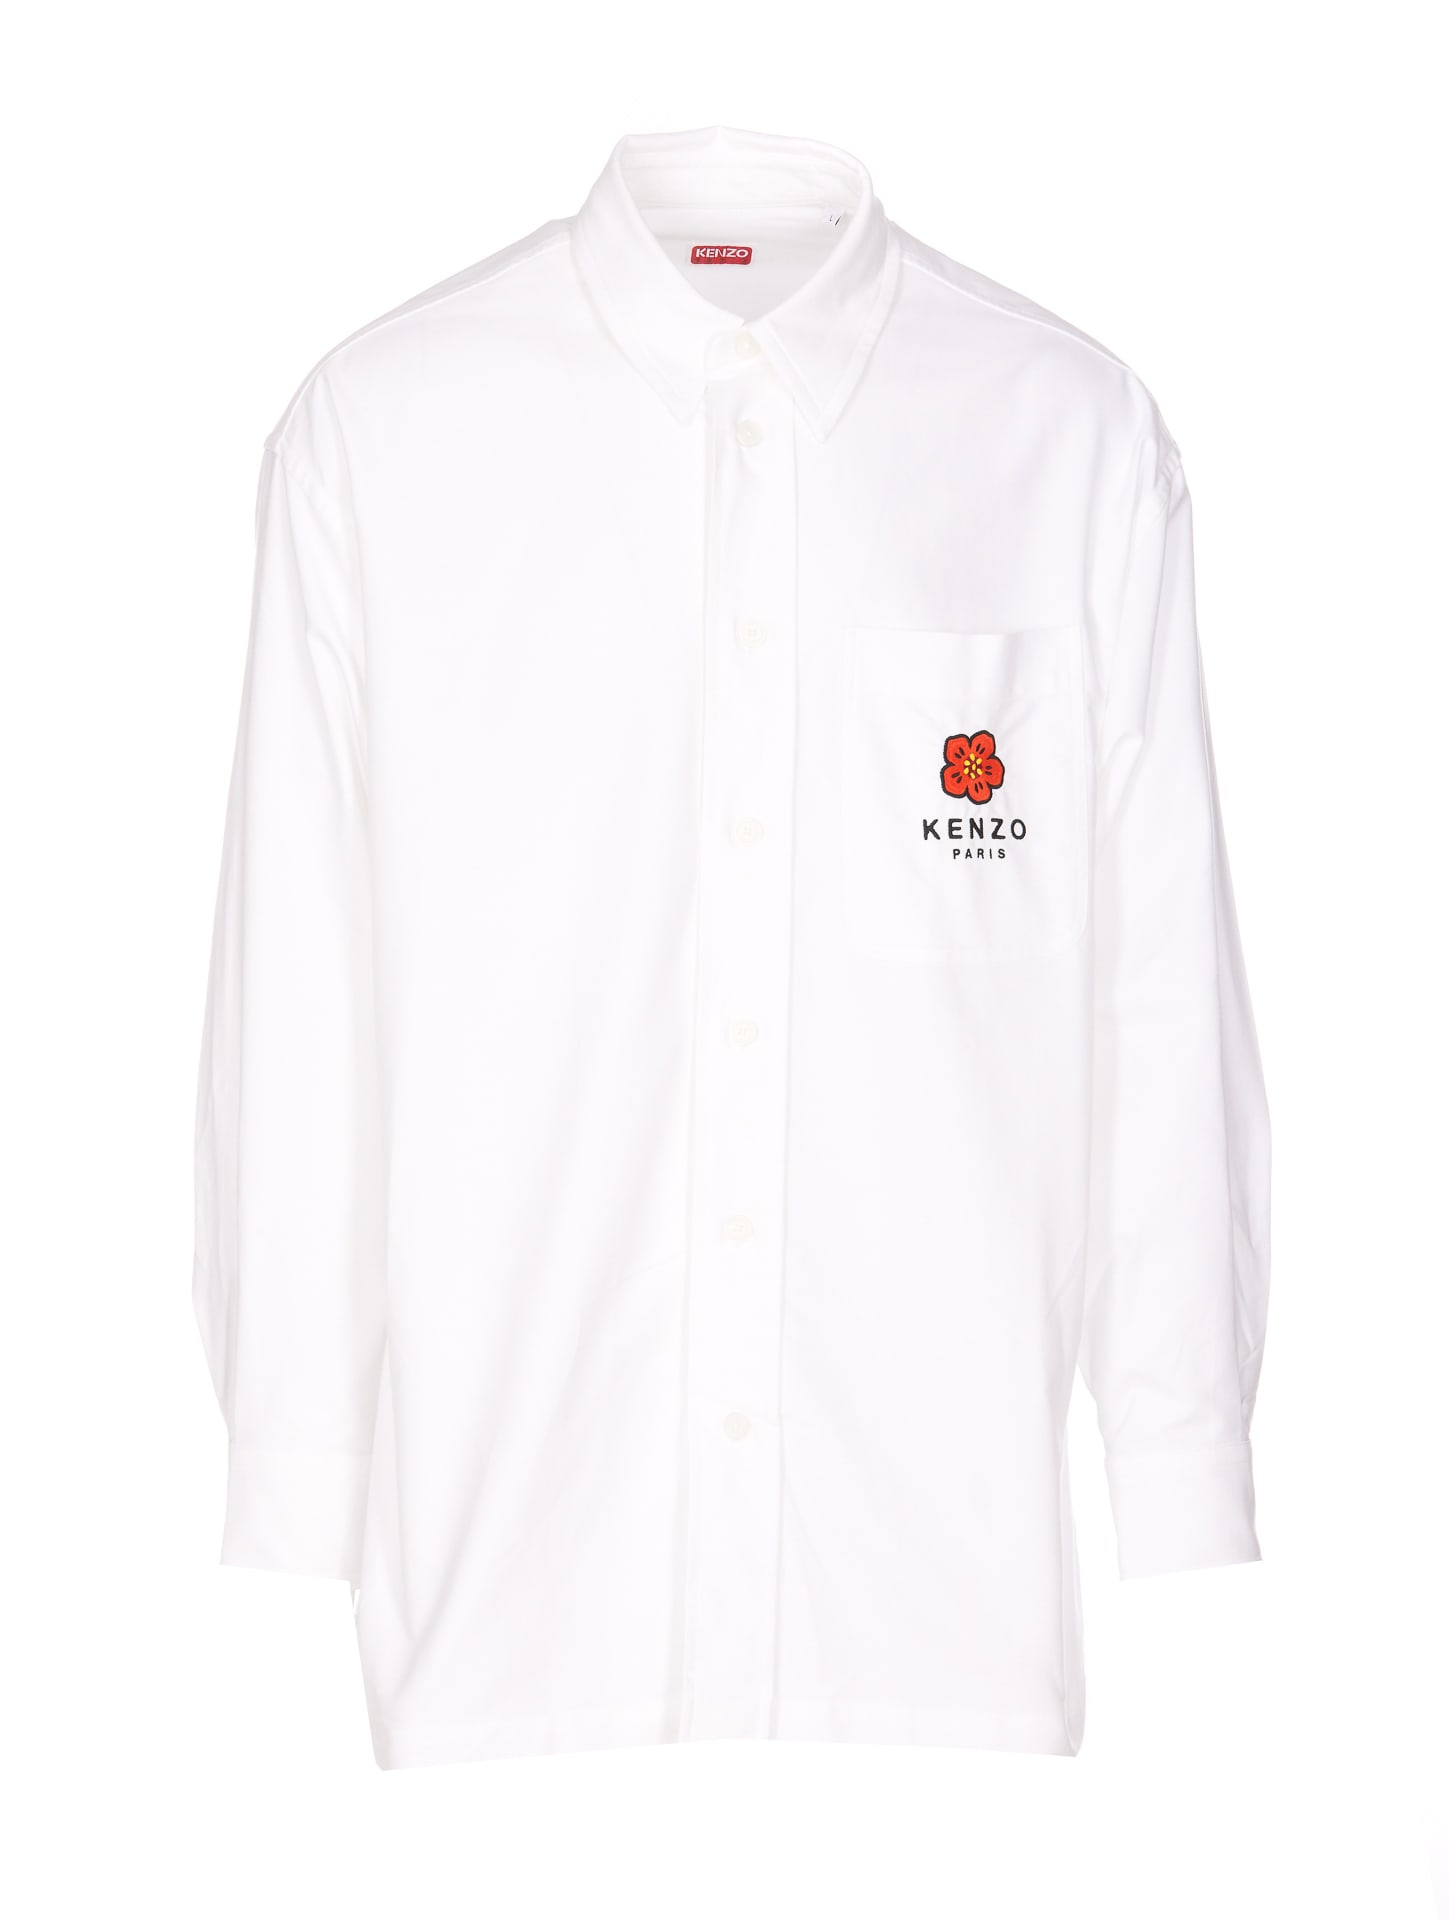 Kenzo Boke Flower Crest Shirt Jacket